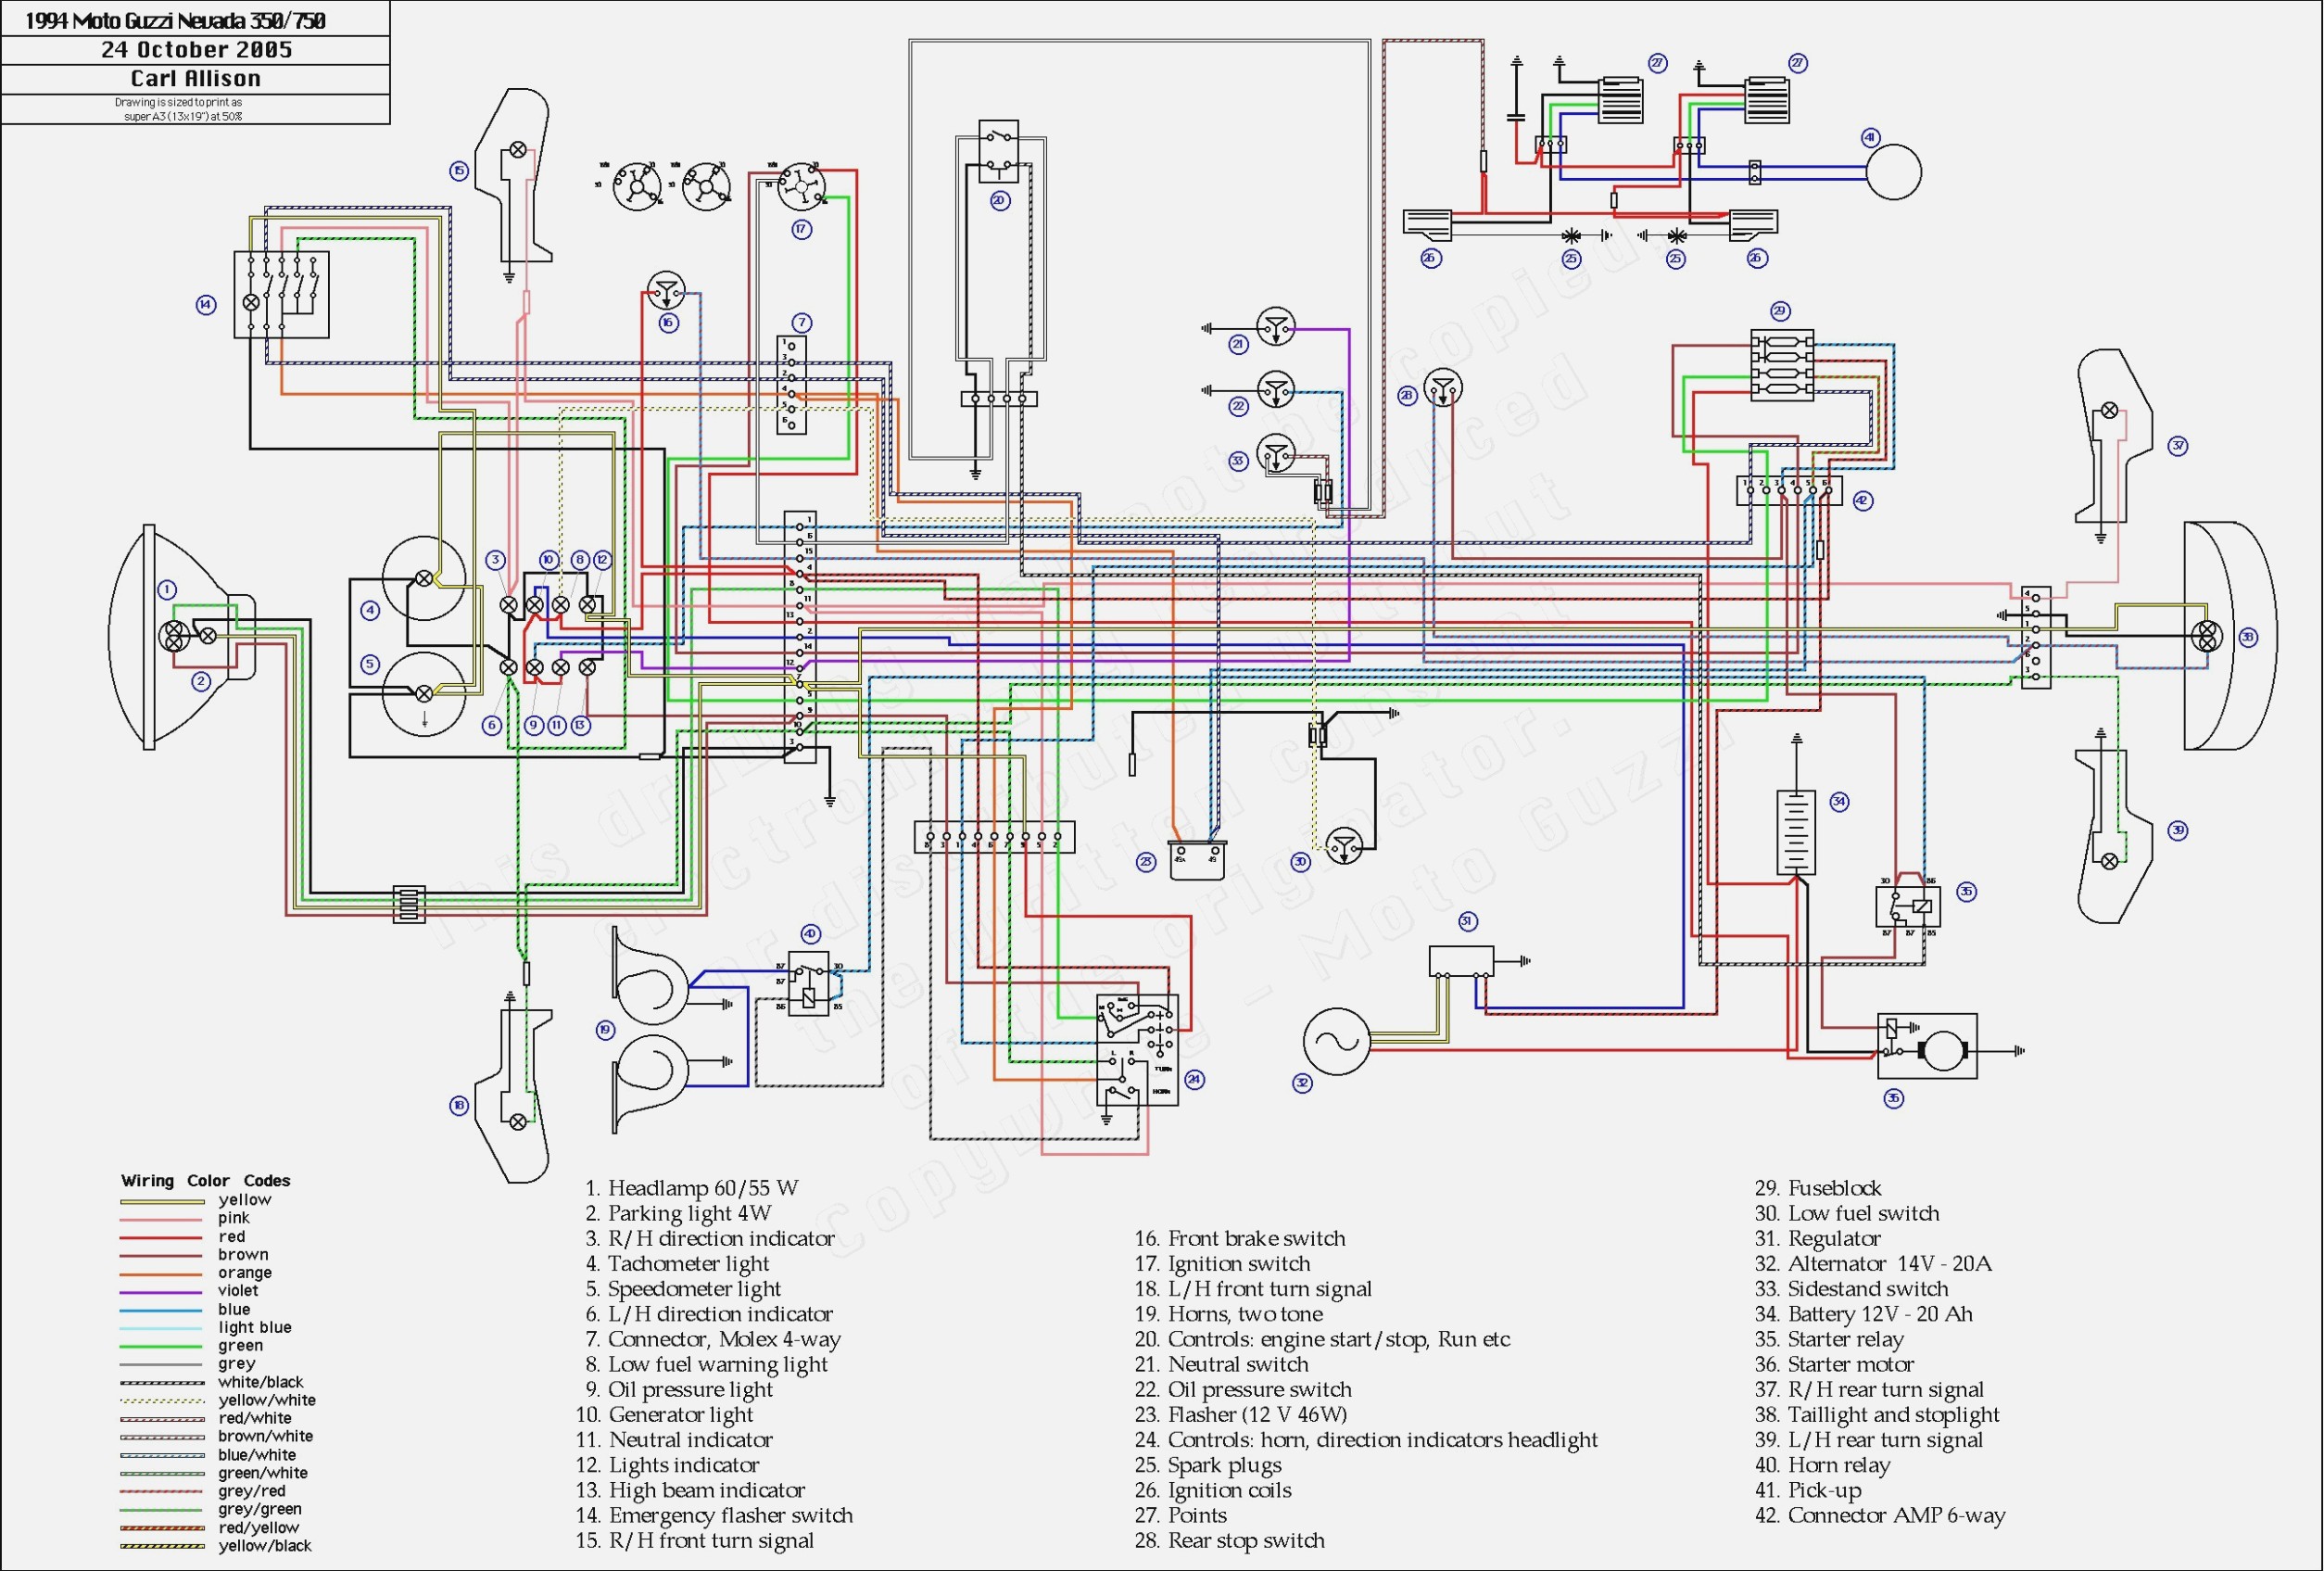 Remote Car Circuit Diagram Power Control Circuit Controlcircuit Circuit Diagram Seekic Of Remote Car Circuit Diagram